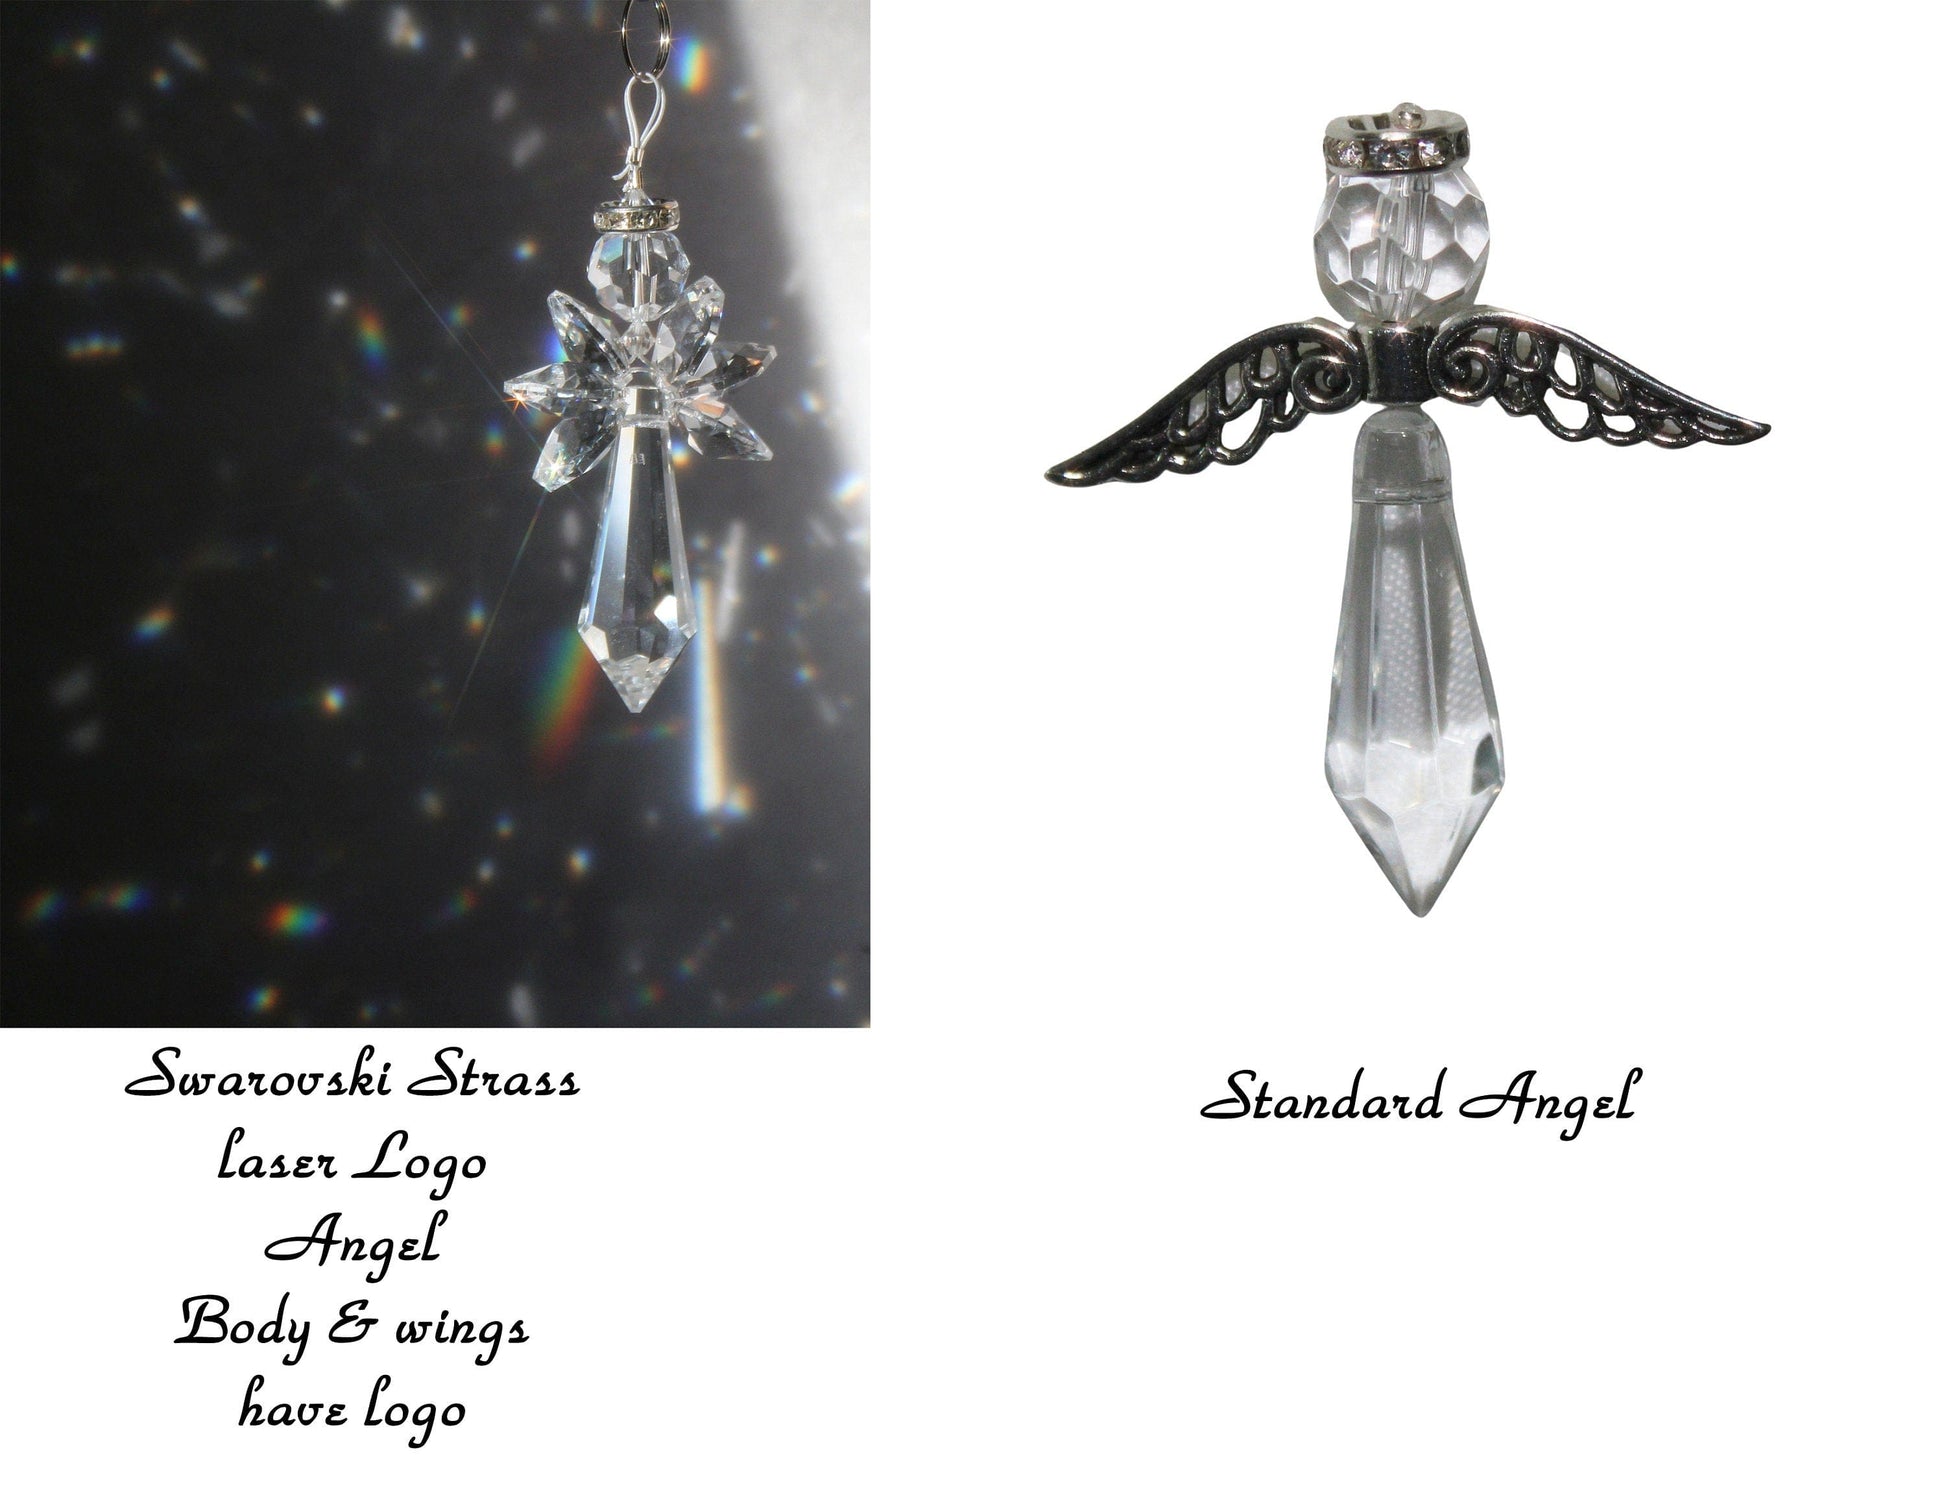 Angel Prisms
Swarovski All Swarovski Crystals body and wings have Swarovski Logo
Standard crystal angel